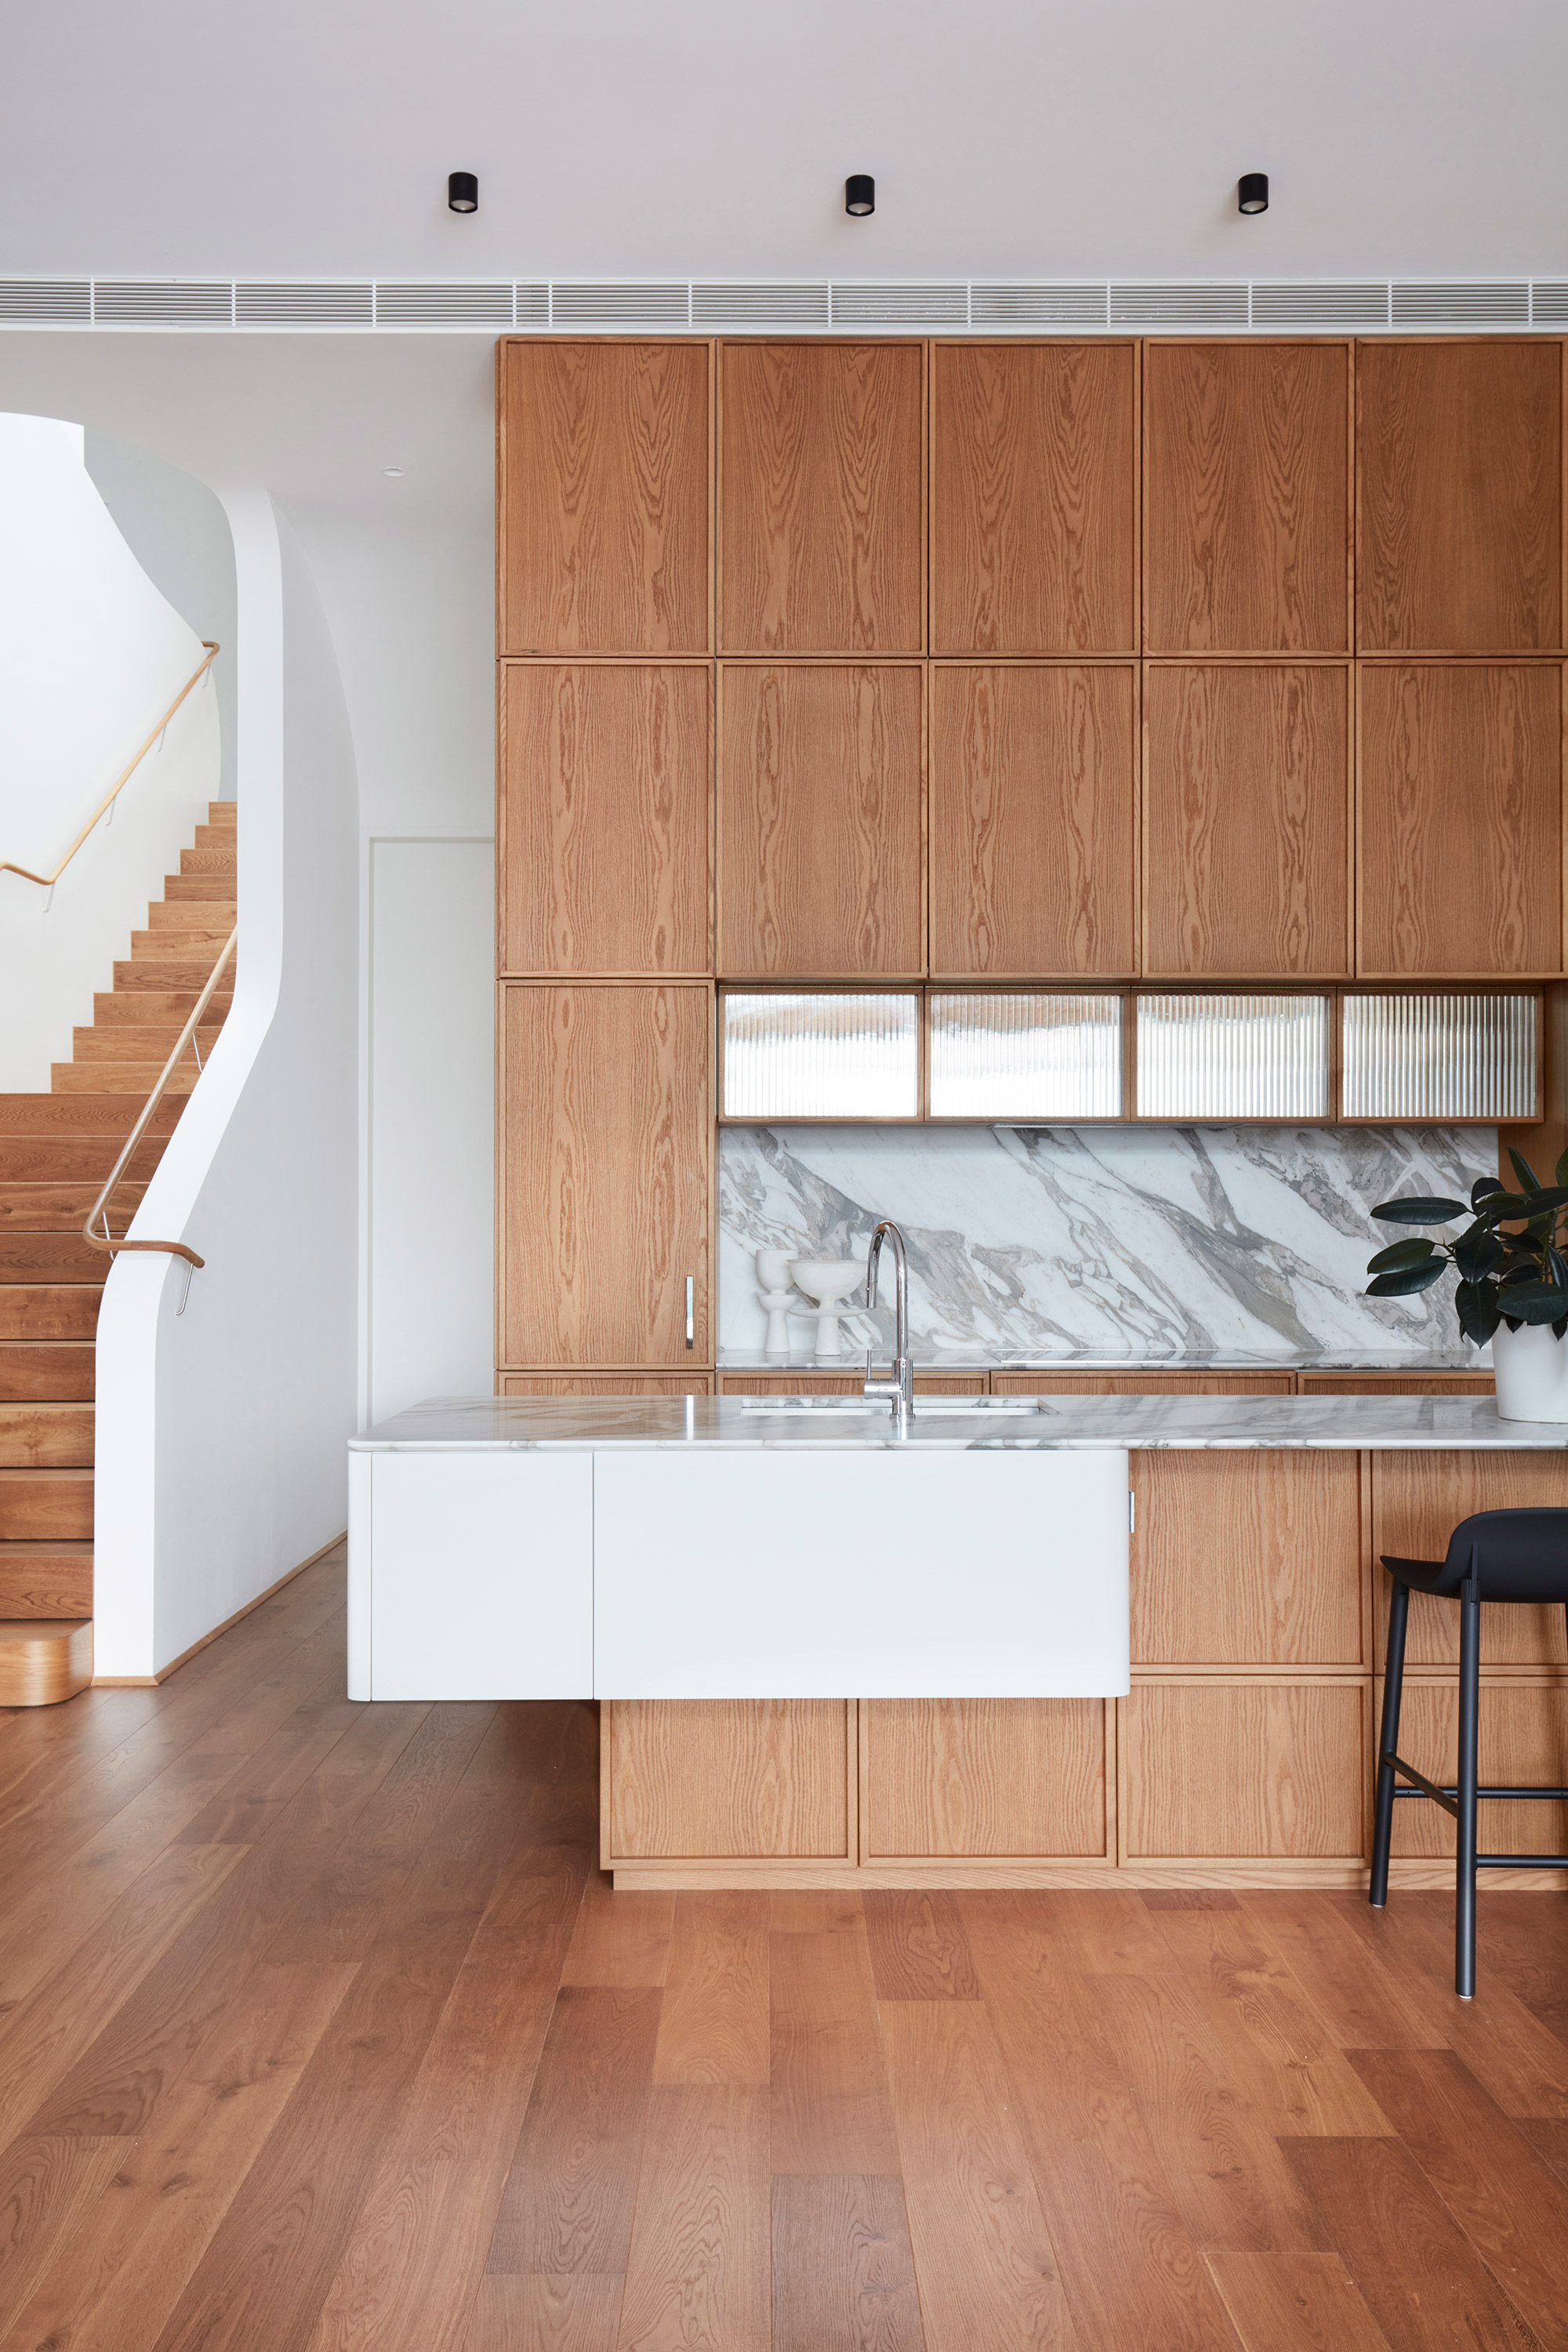 Earth-Ship house by Luigi Rosselli, modern wood kitchen